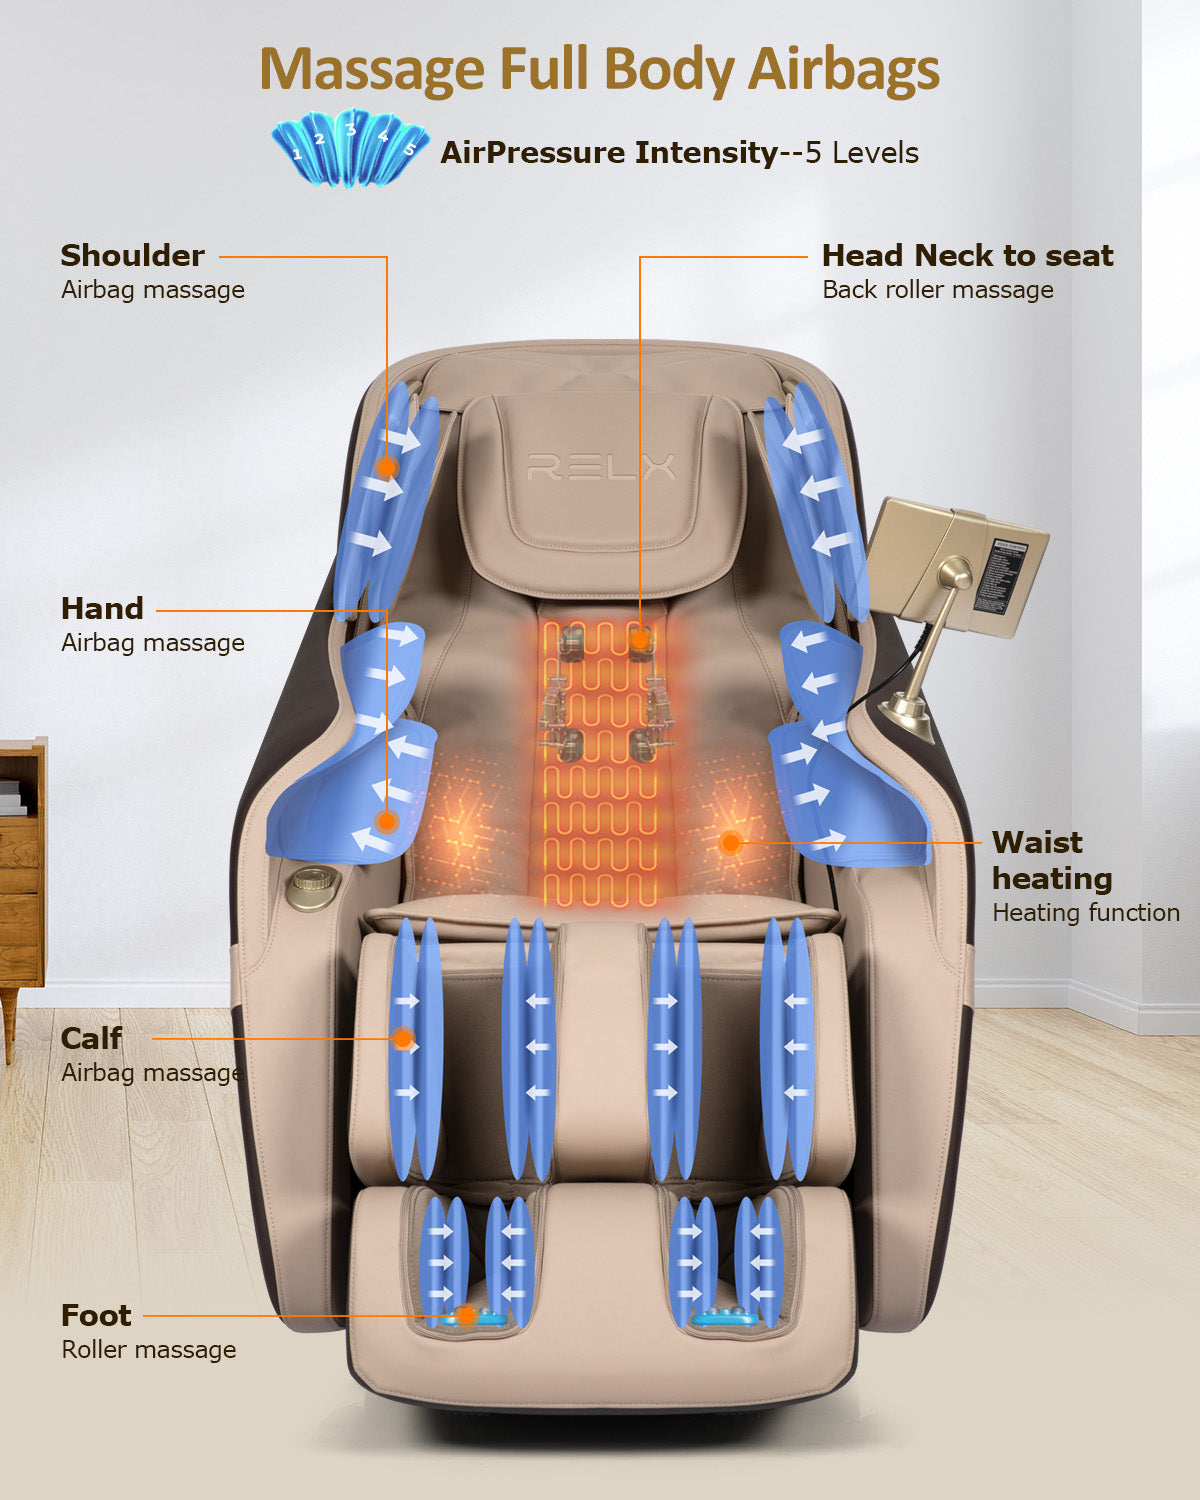 RELX Venus Pro Intelligent Massage Chair